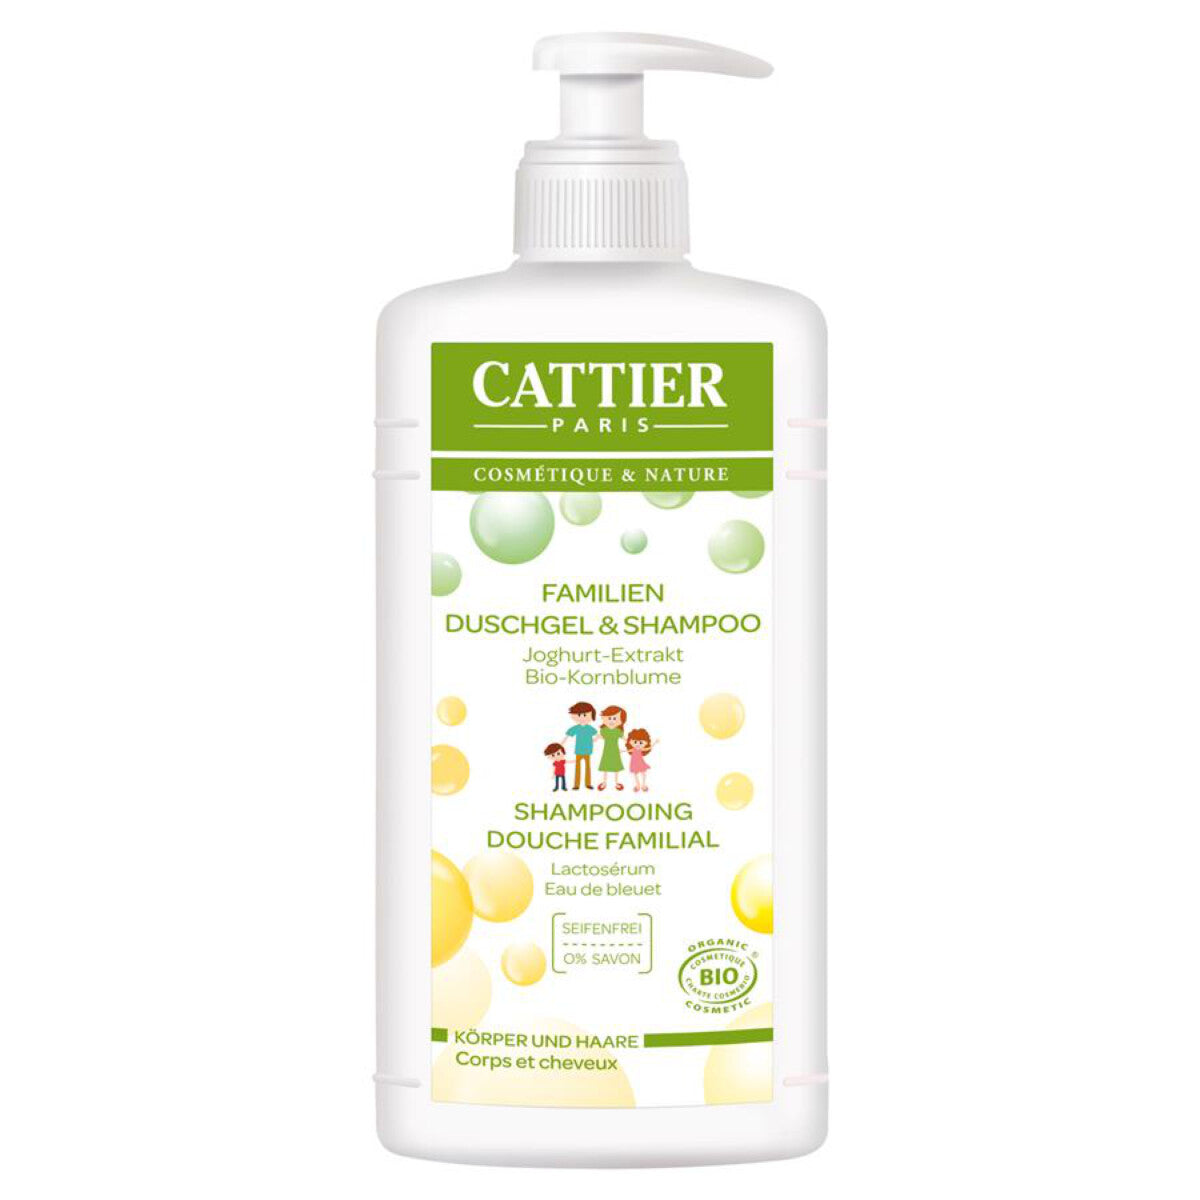 CATTIER Familien Duschgel & Shampoo - 500 ml